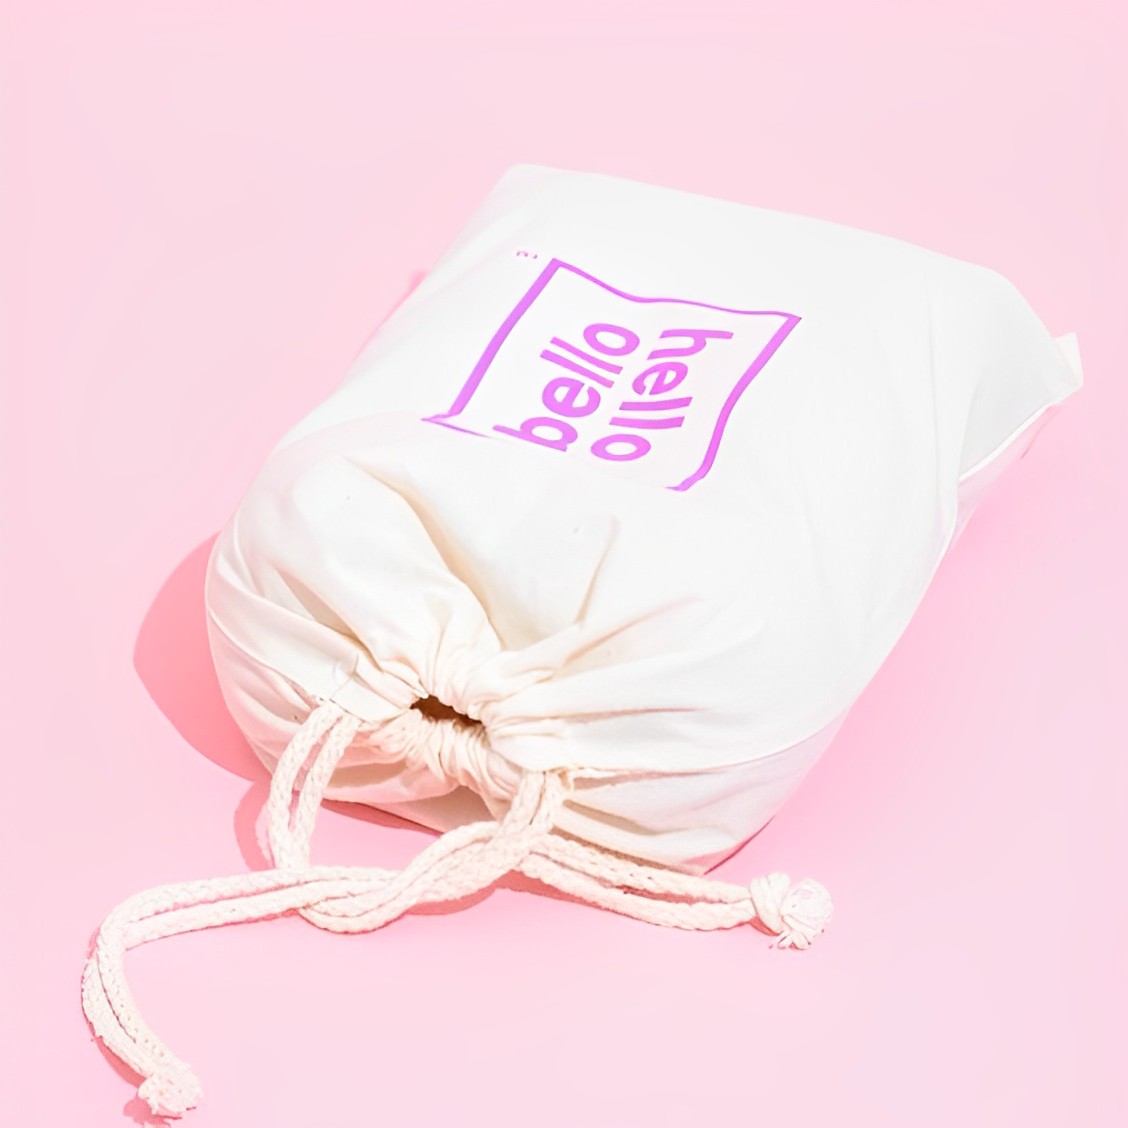 Custom Printed Logo Natural Cotton Drawstring Bag Eco-Friendly